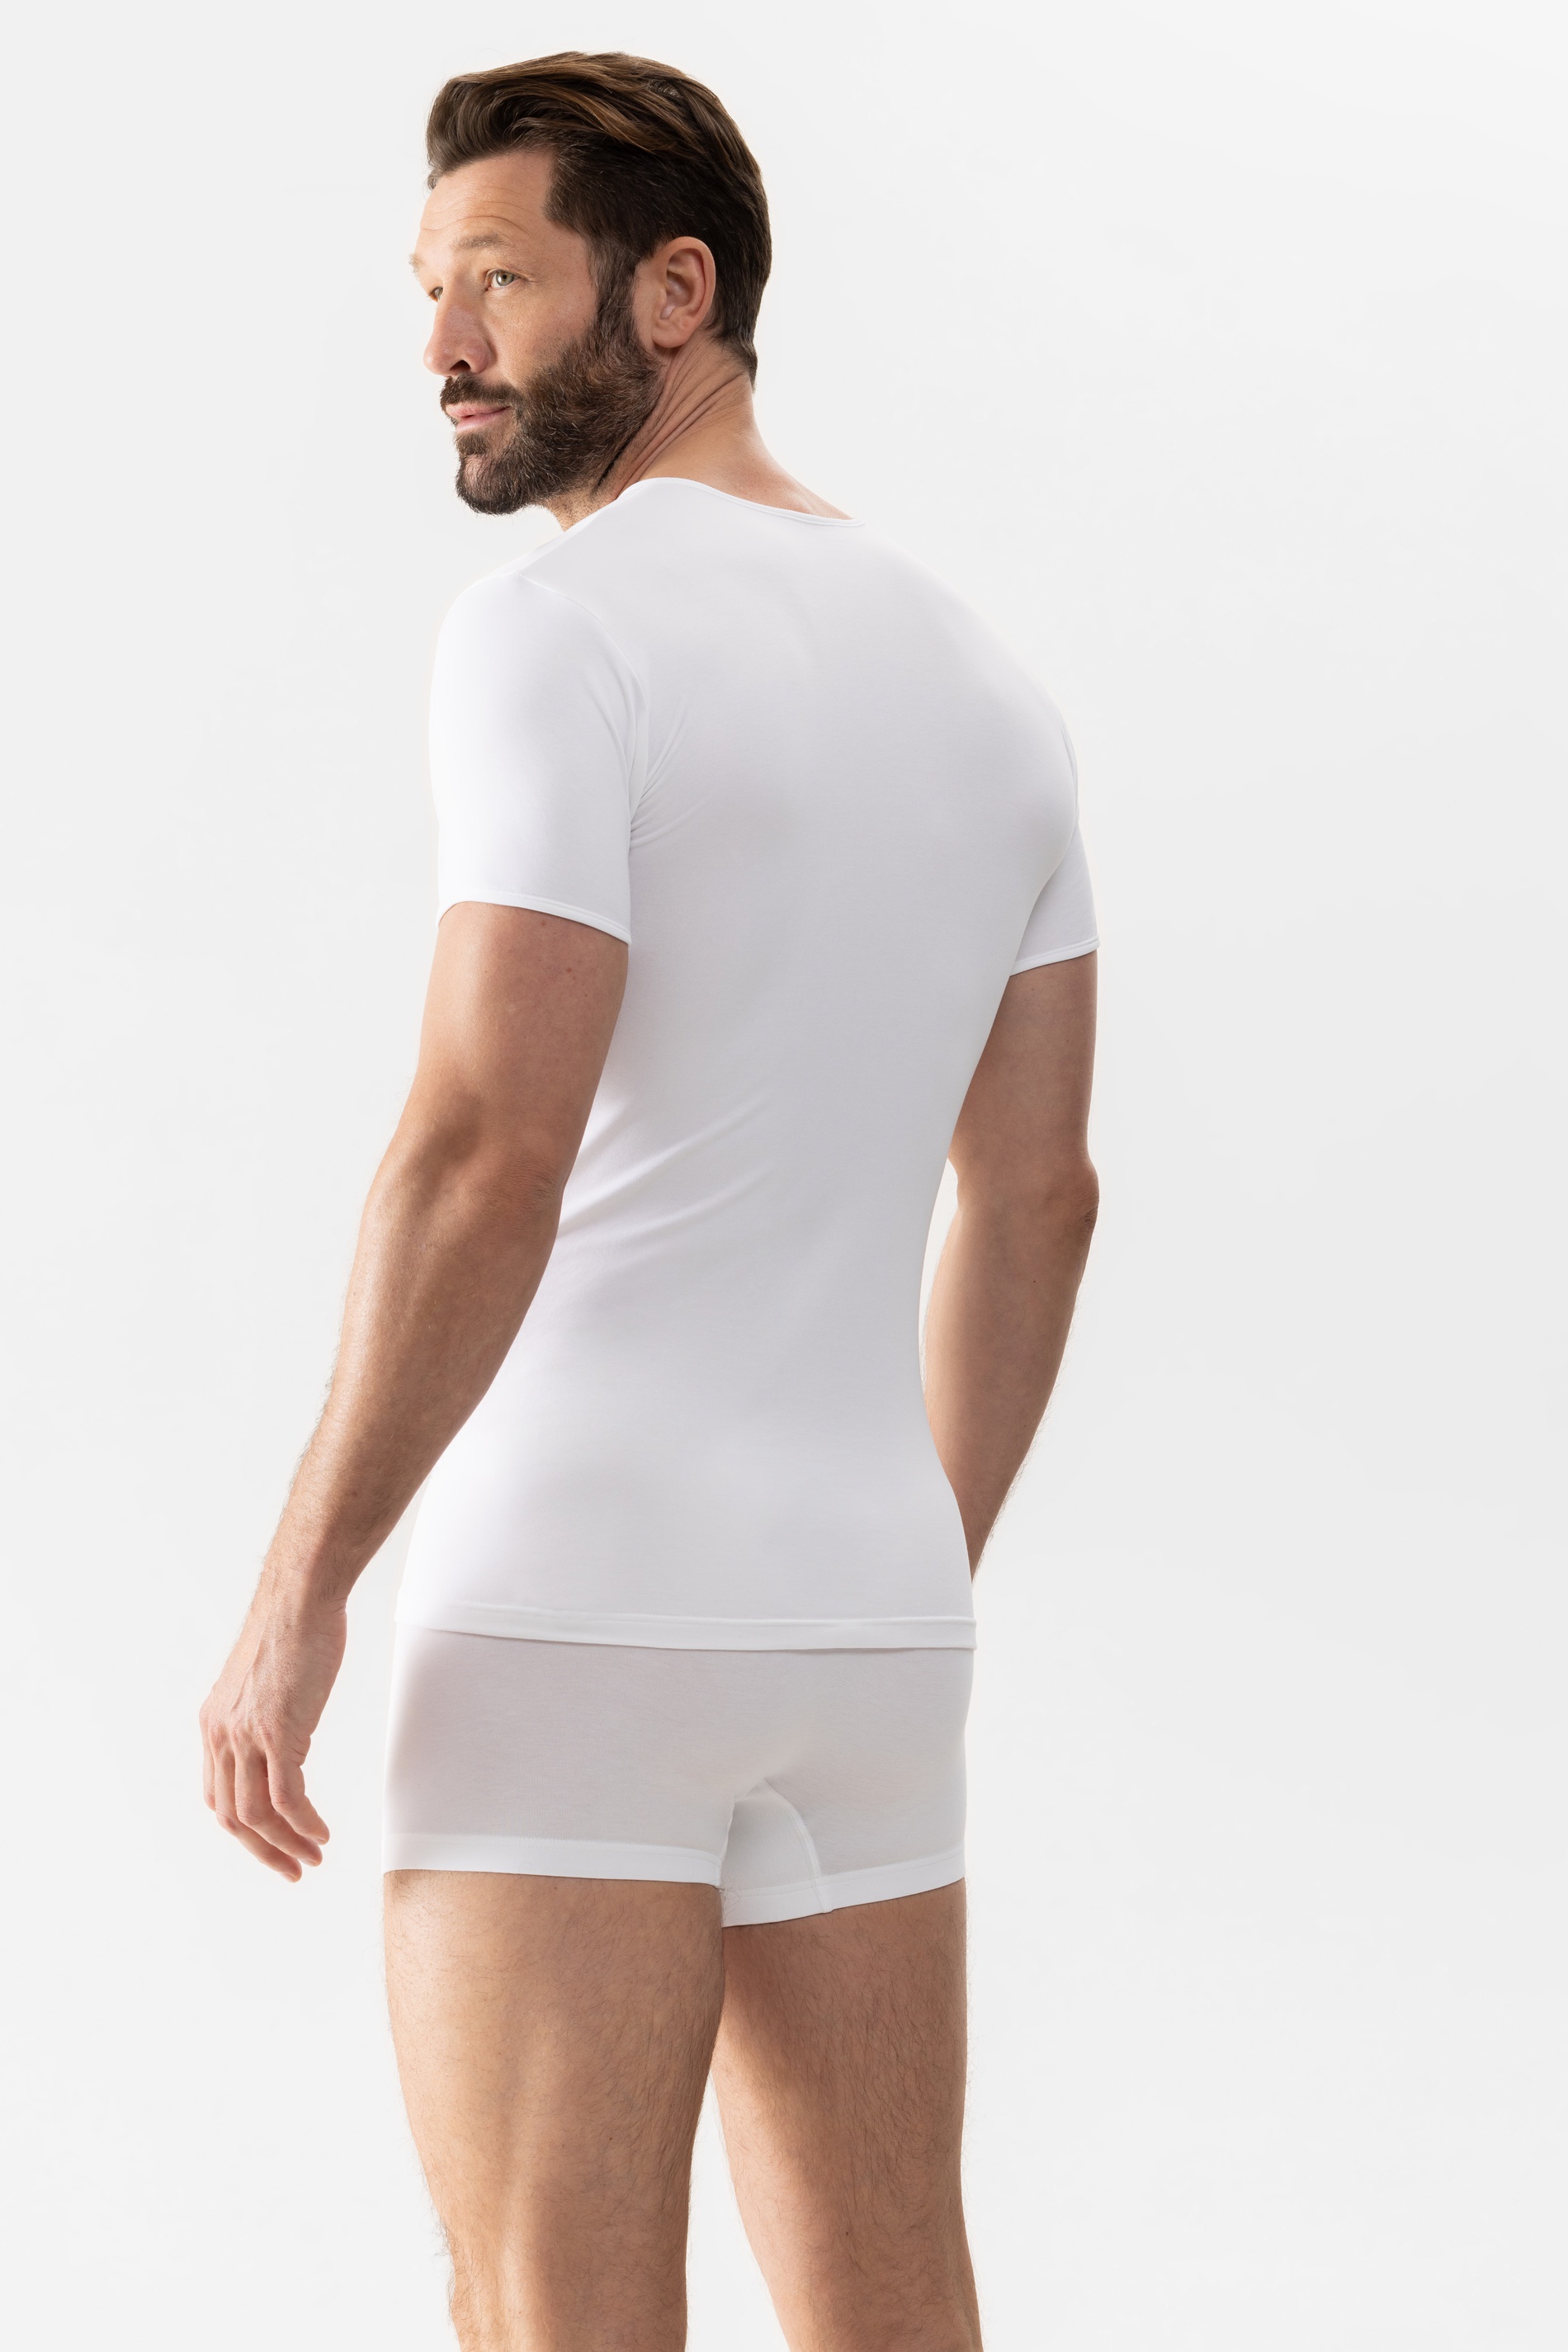 V-neck shirt White Serie Software Rear View | mey®